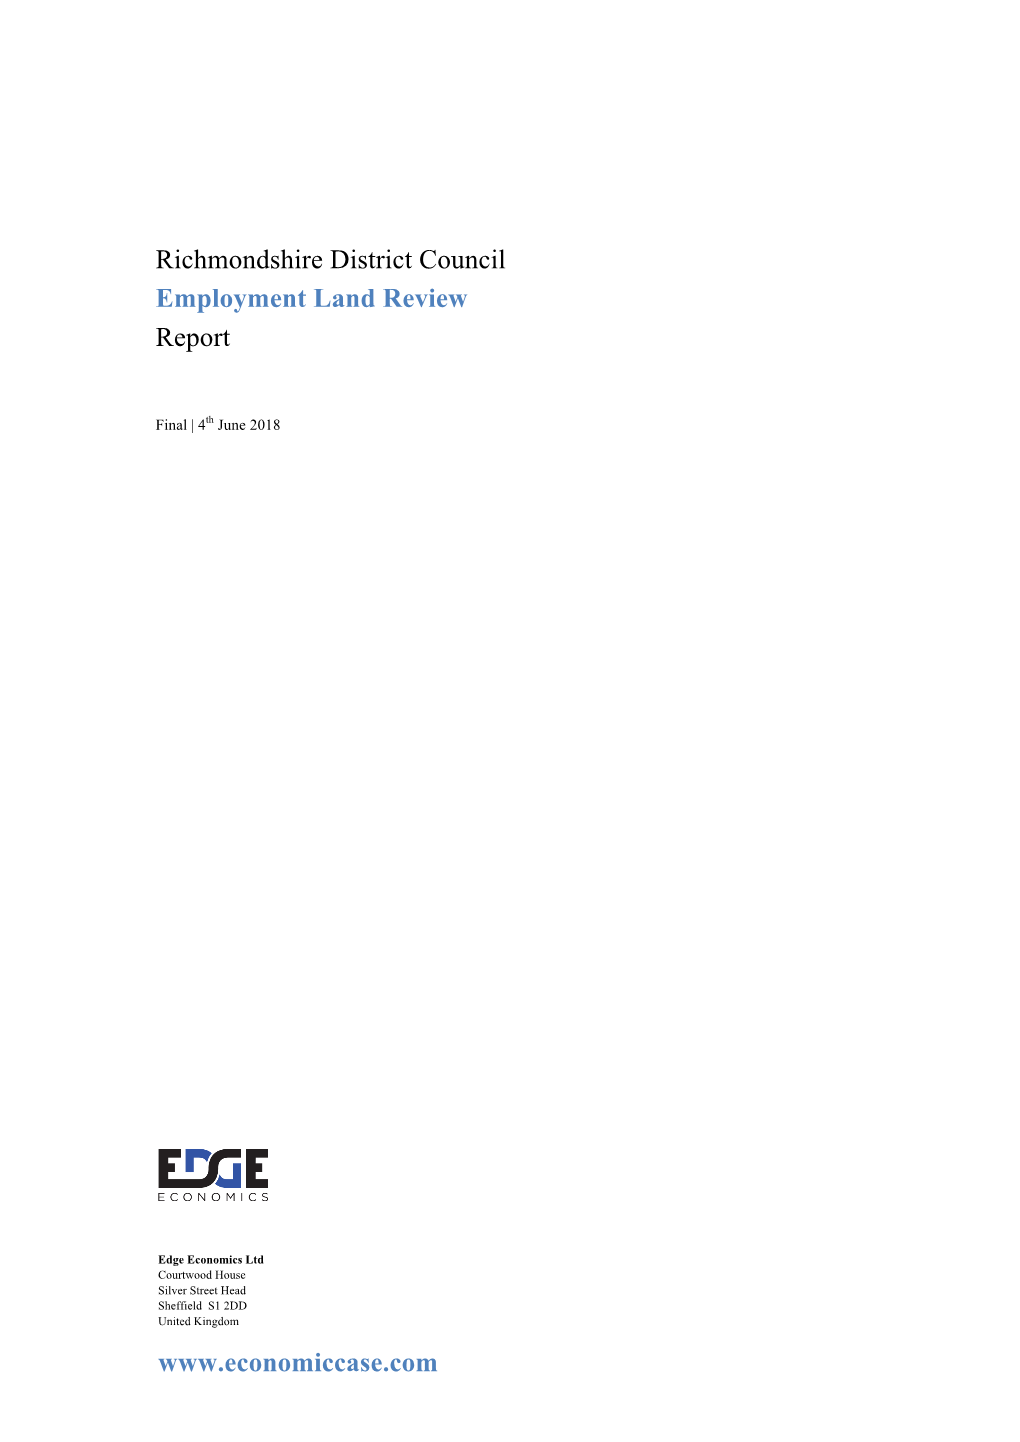 Richmondshire Employment Land Review (2018)